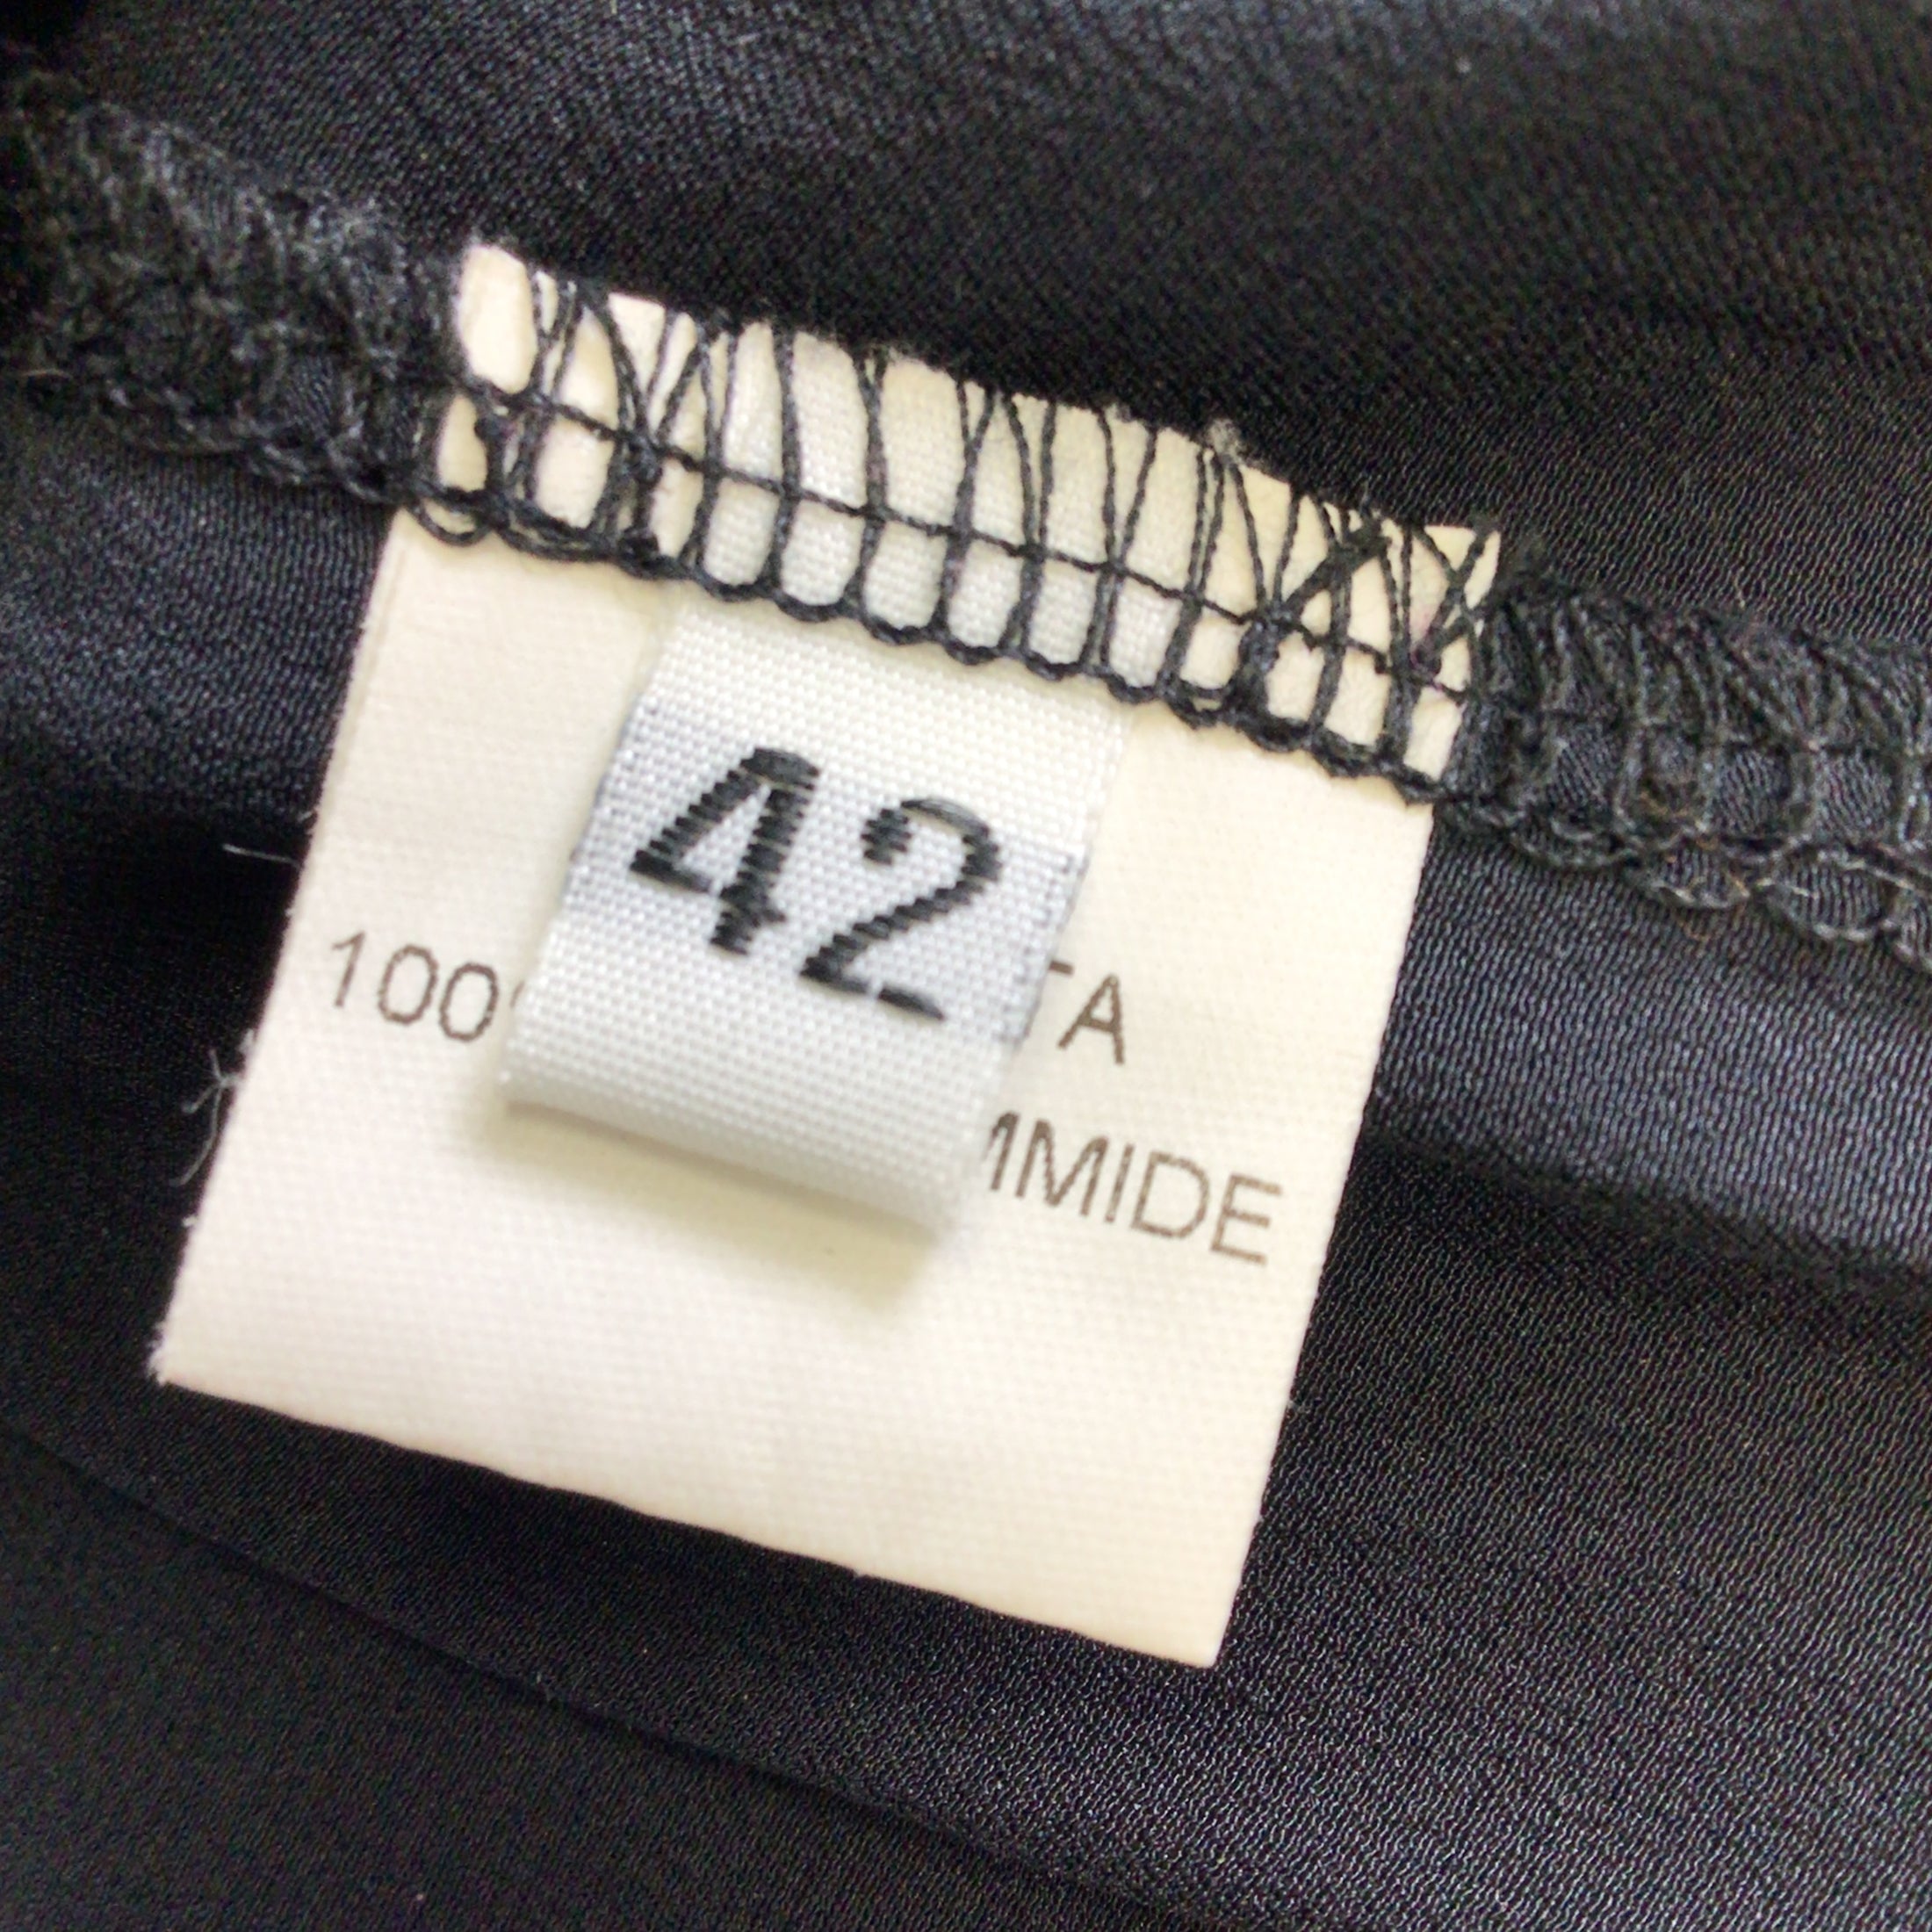 Alexander McQueen Black Bow Detail Cold Shoulder Lace Dress